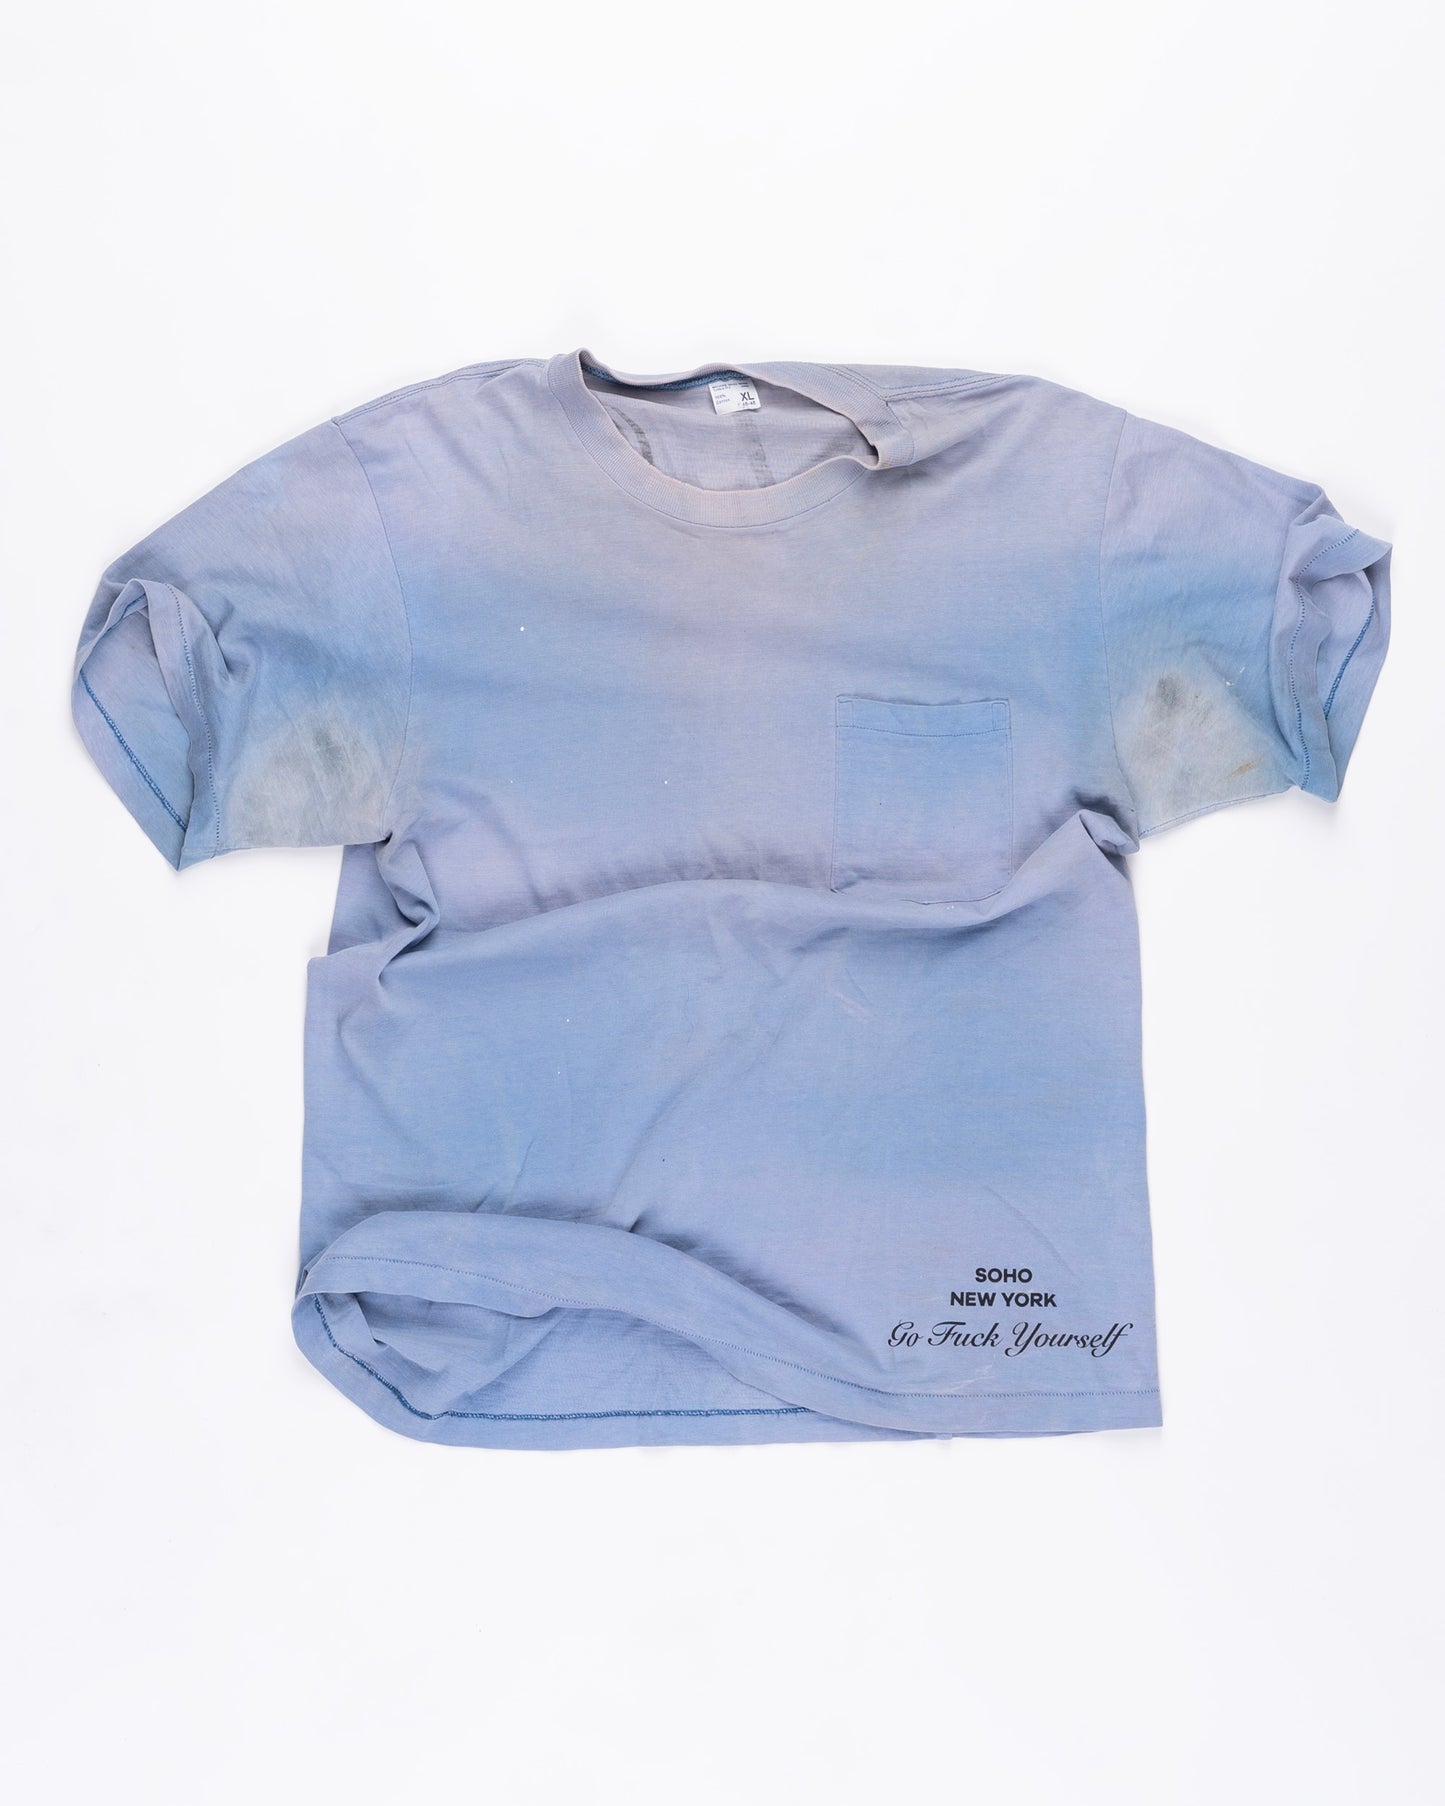 Sky Thrashed Blue Faded T-shirt Size: XLarge